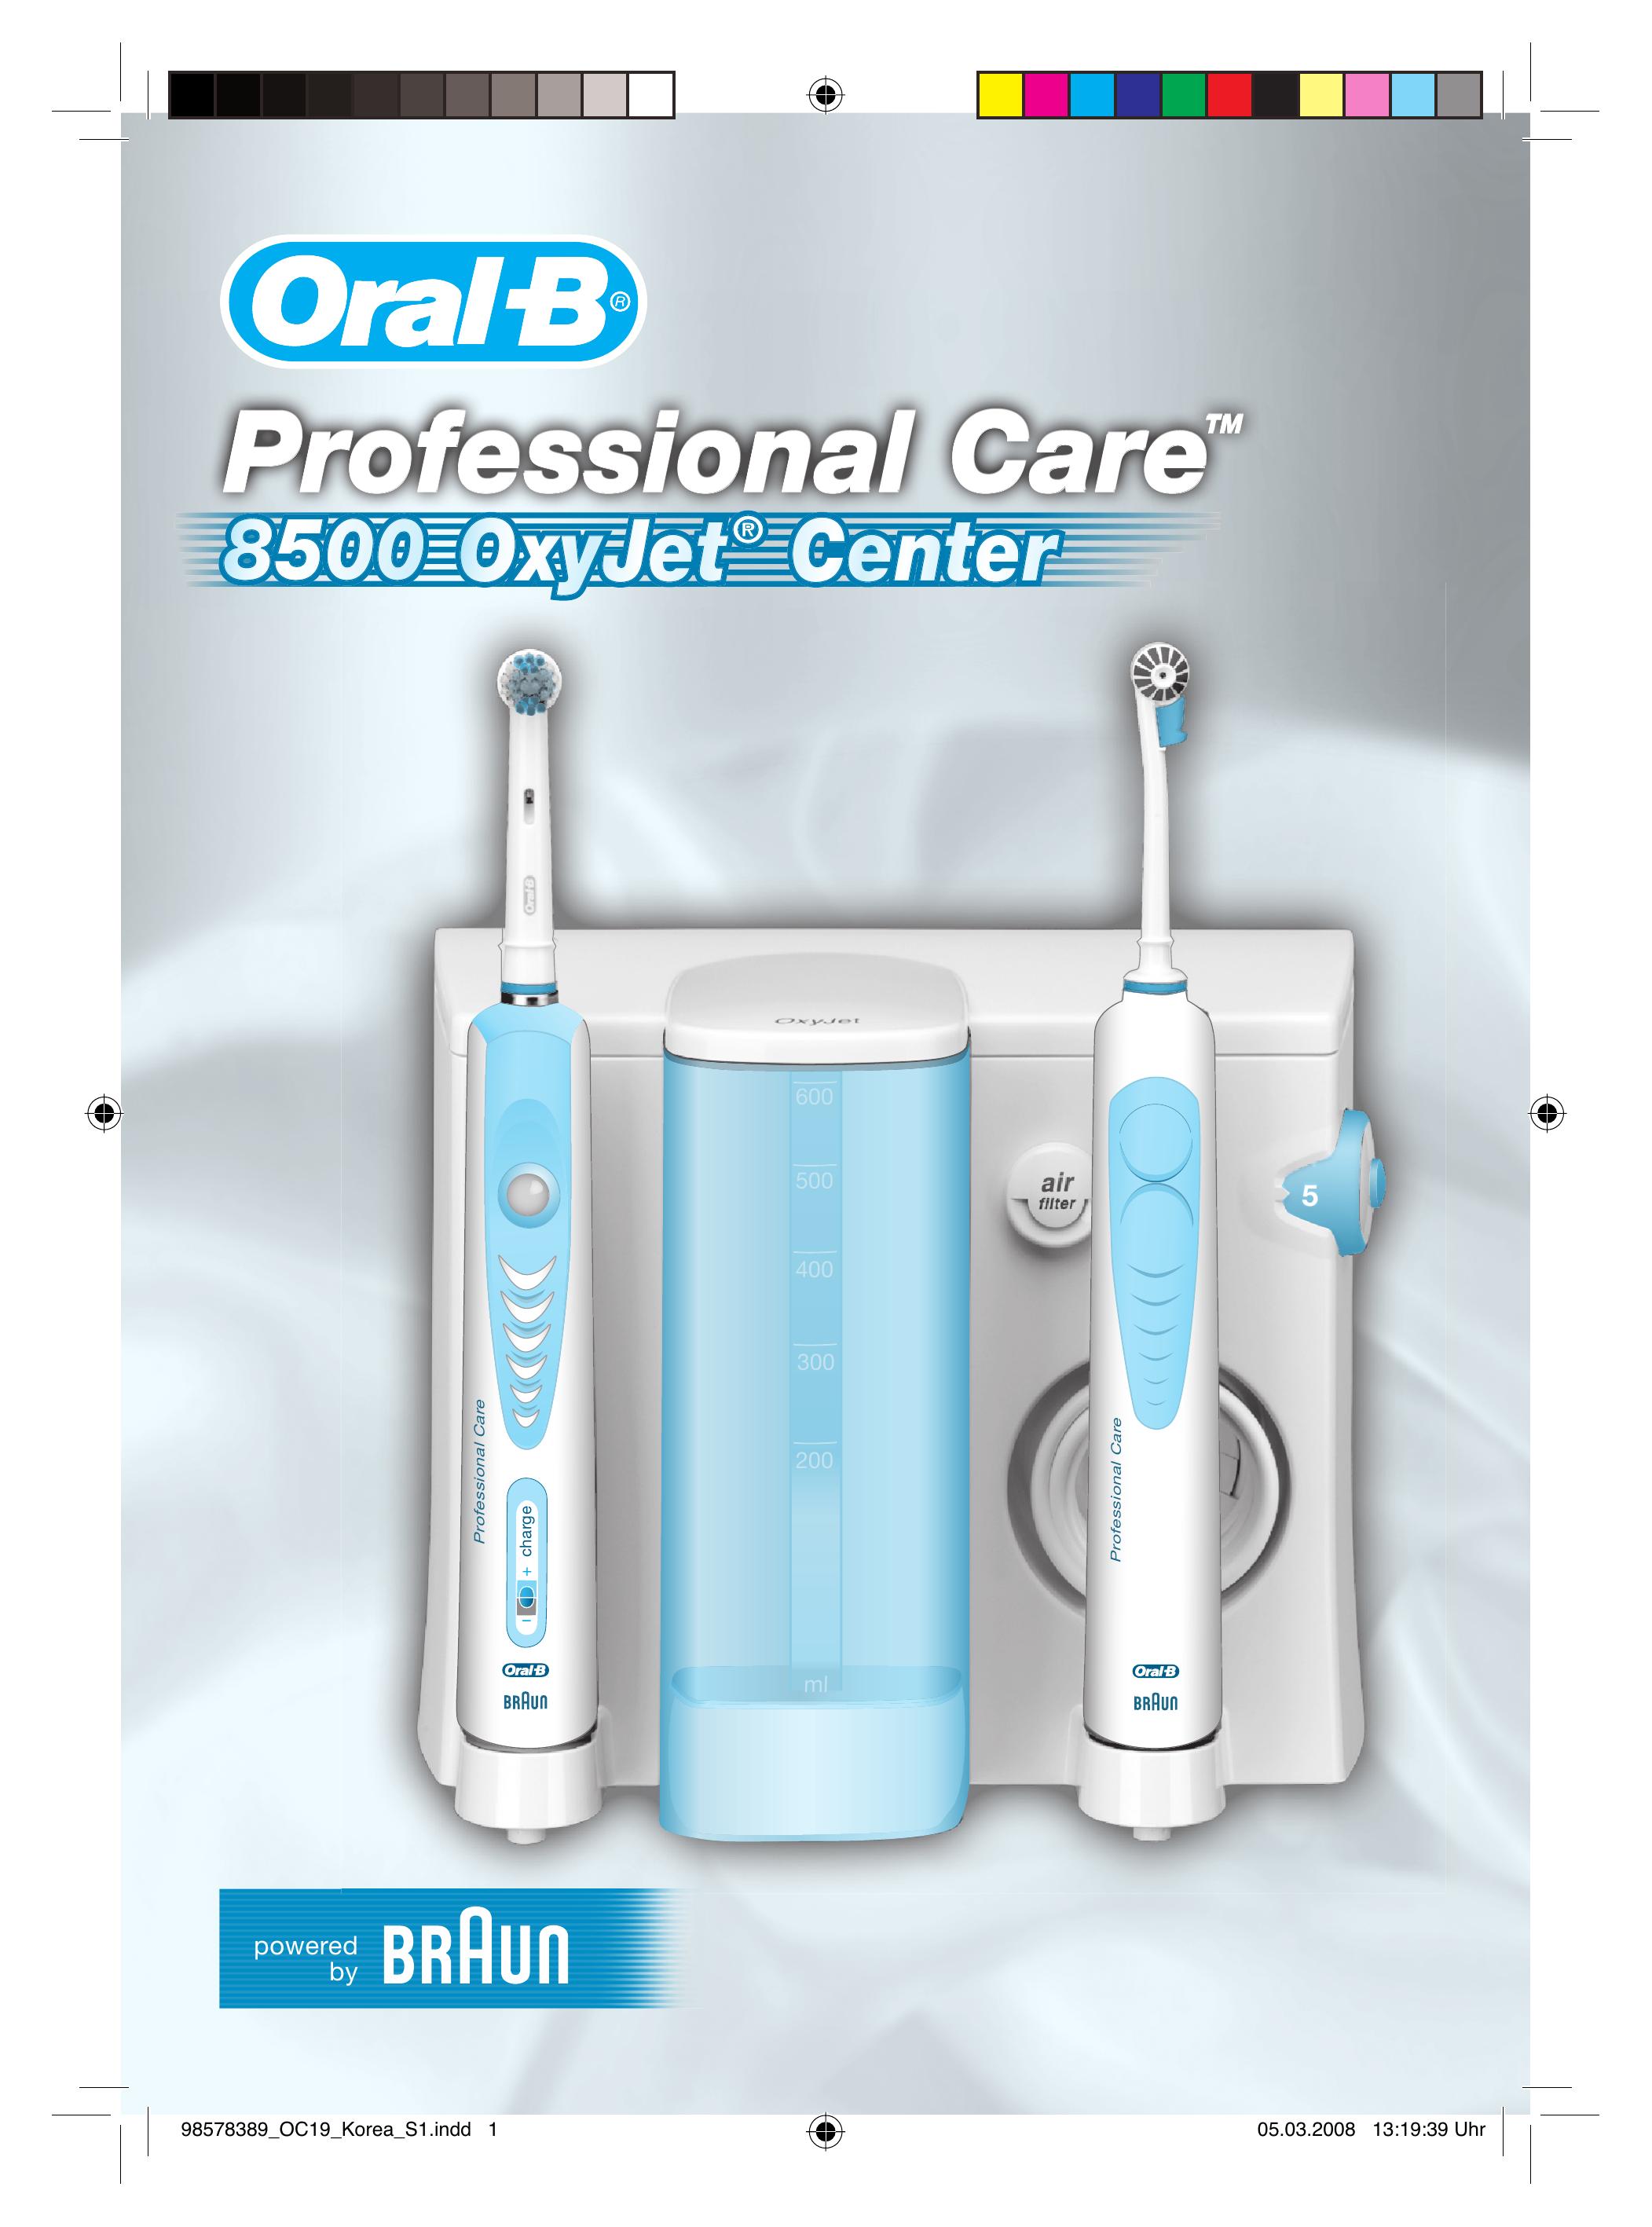 Braun 8500 OxyJet Electric Toothbrush User Manual